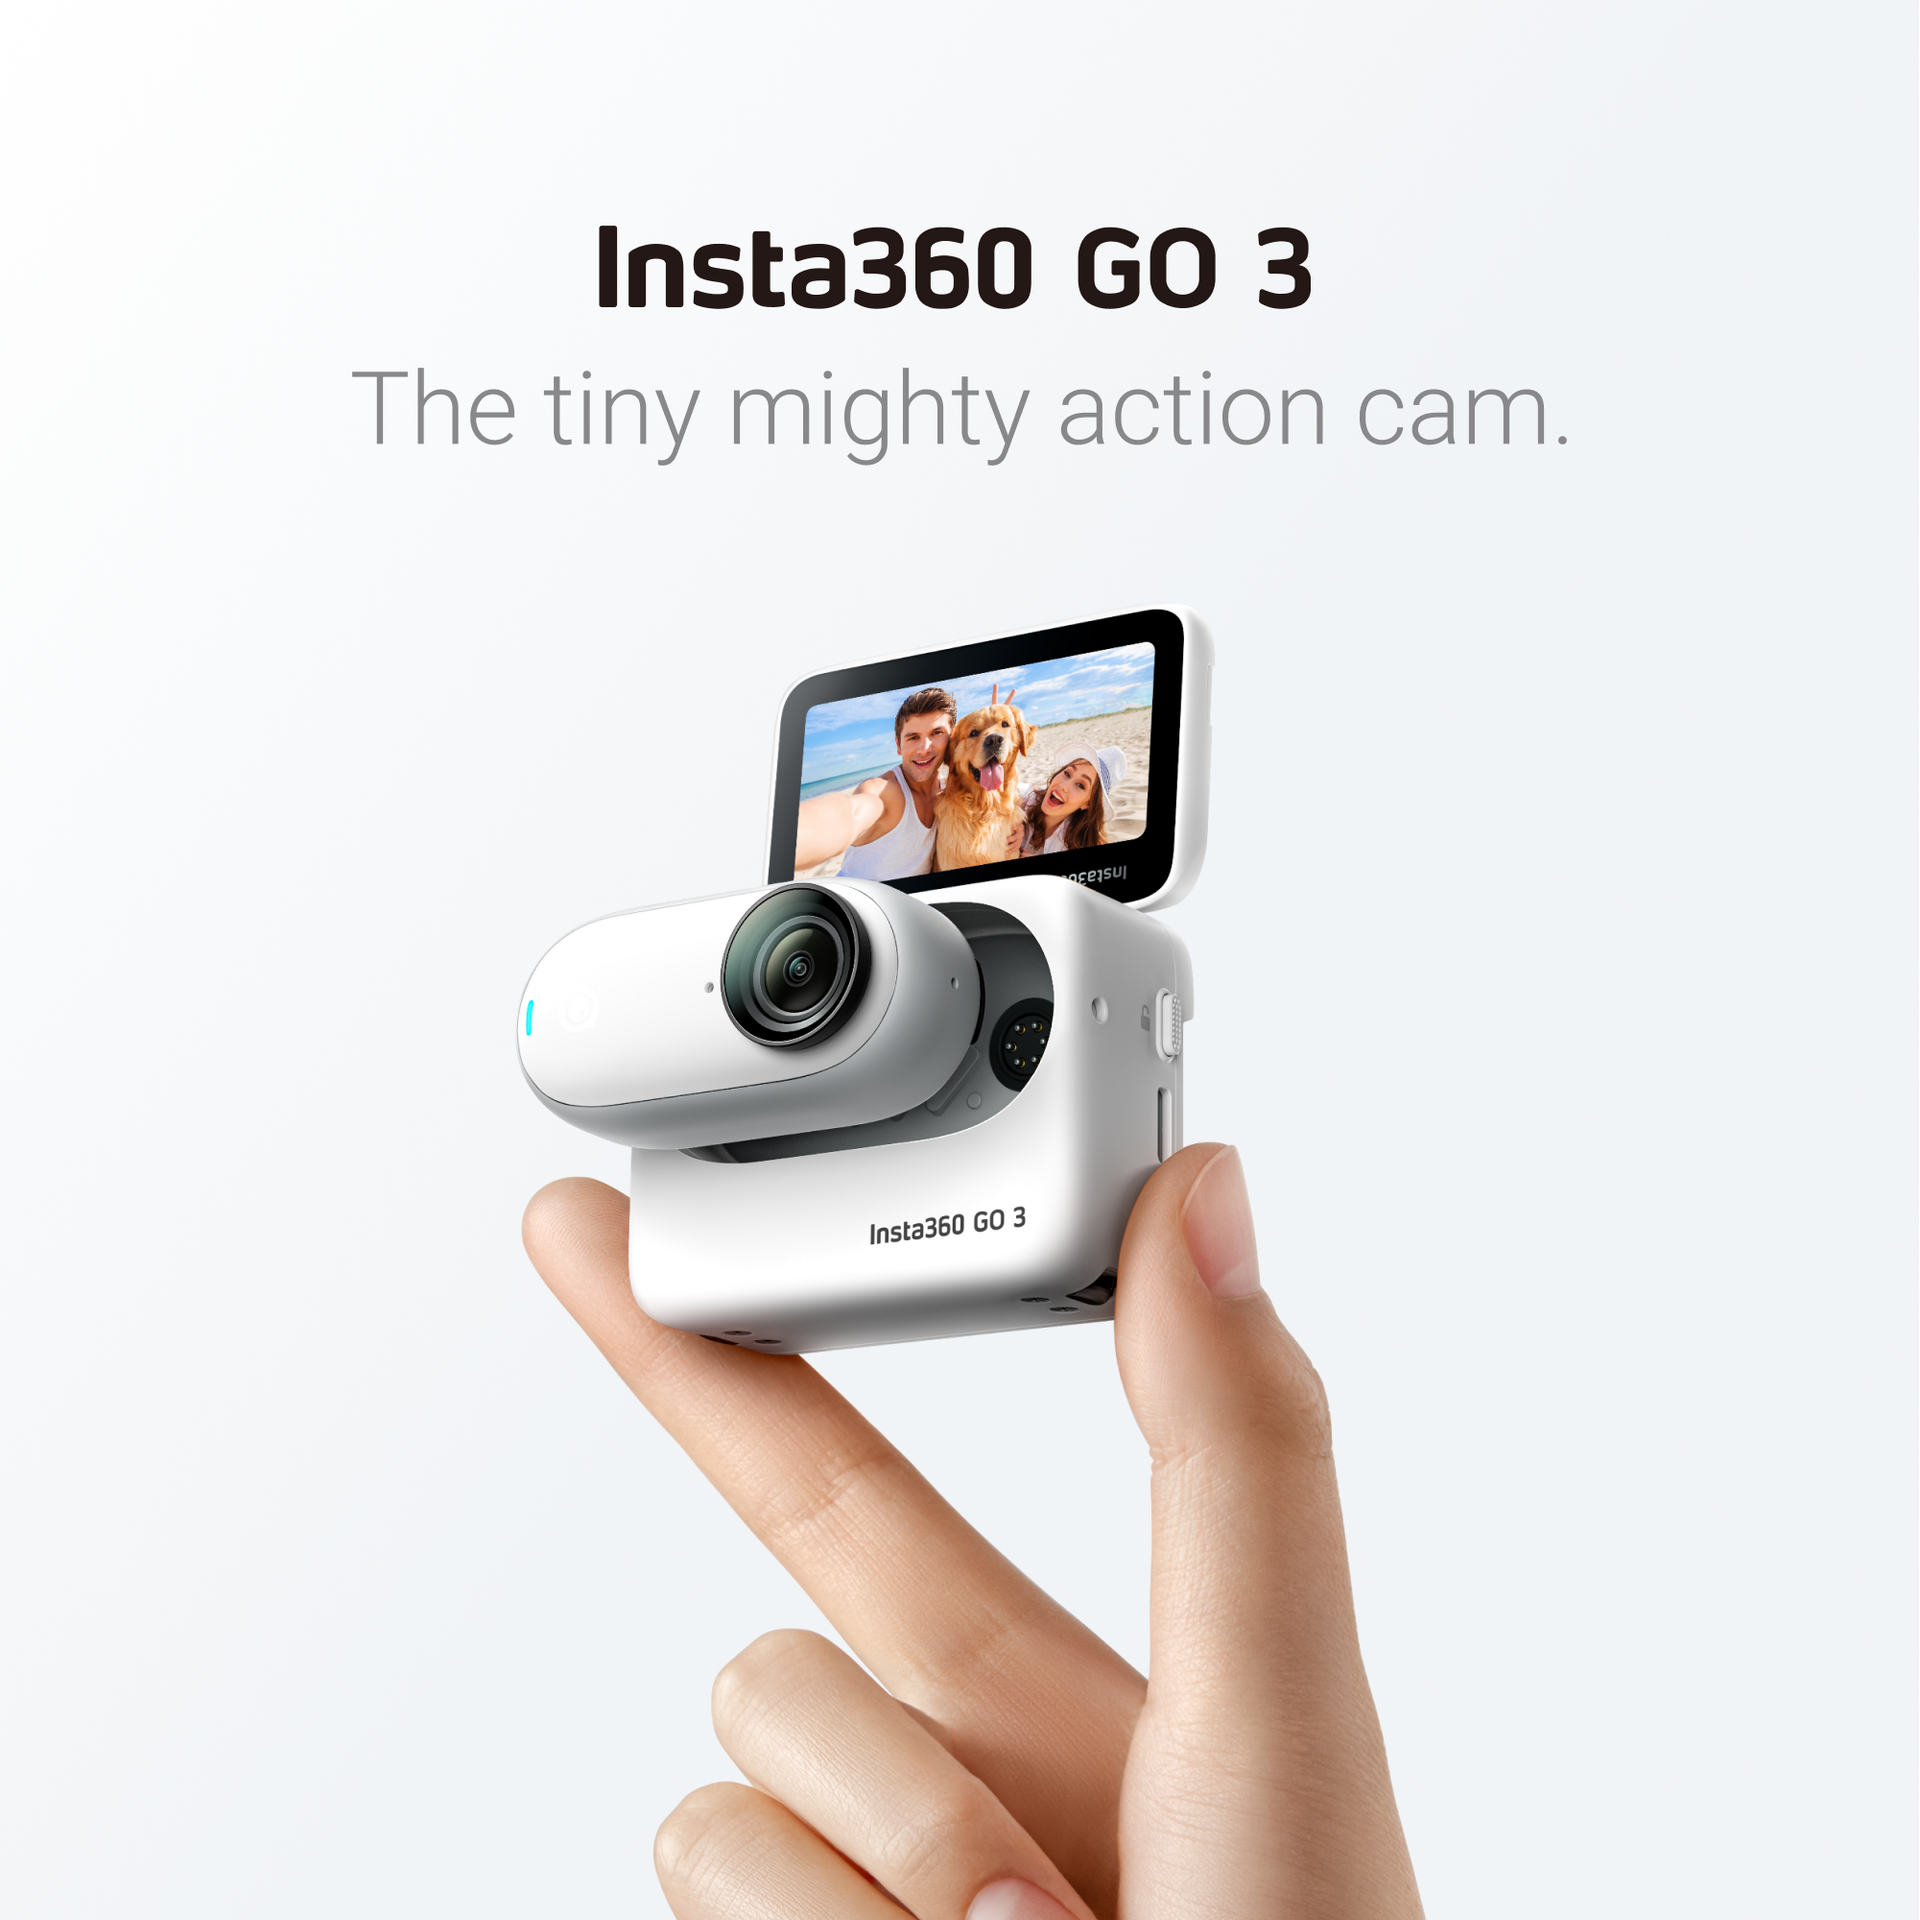 Insta360 GO 3発売。超小型どこでもカメラが大幅進化、画面付き